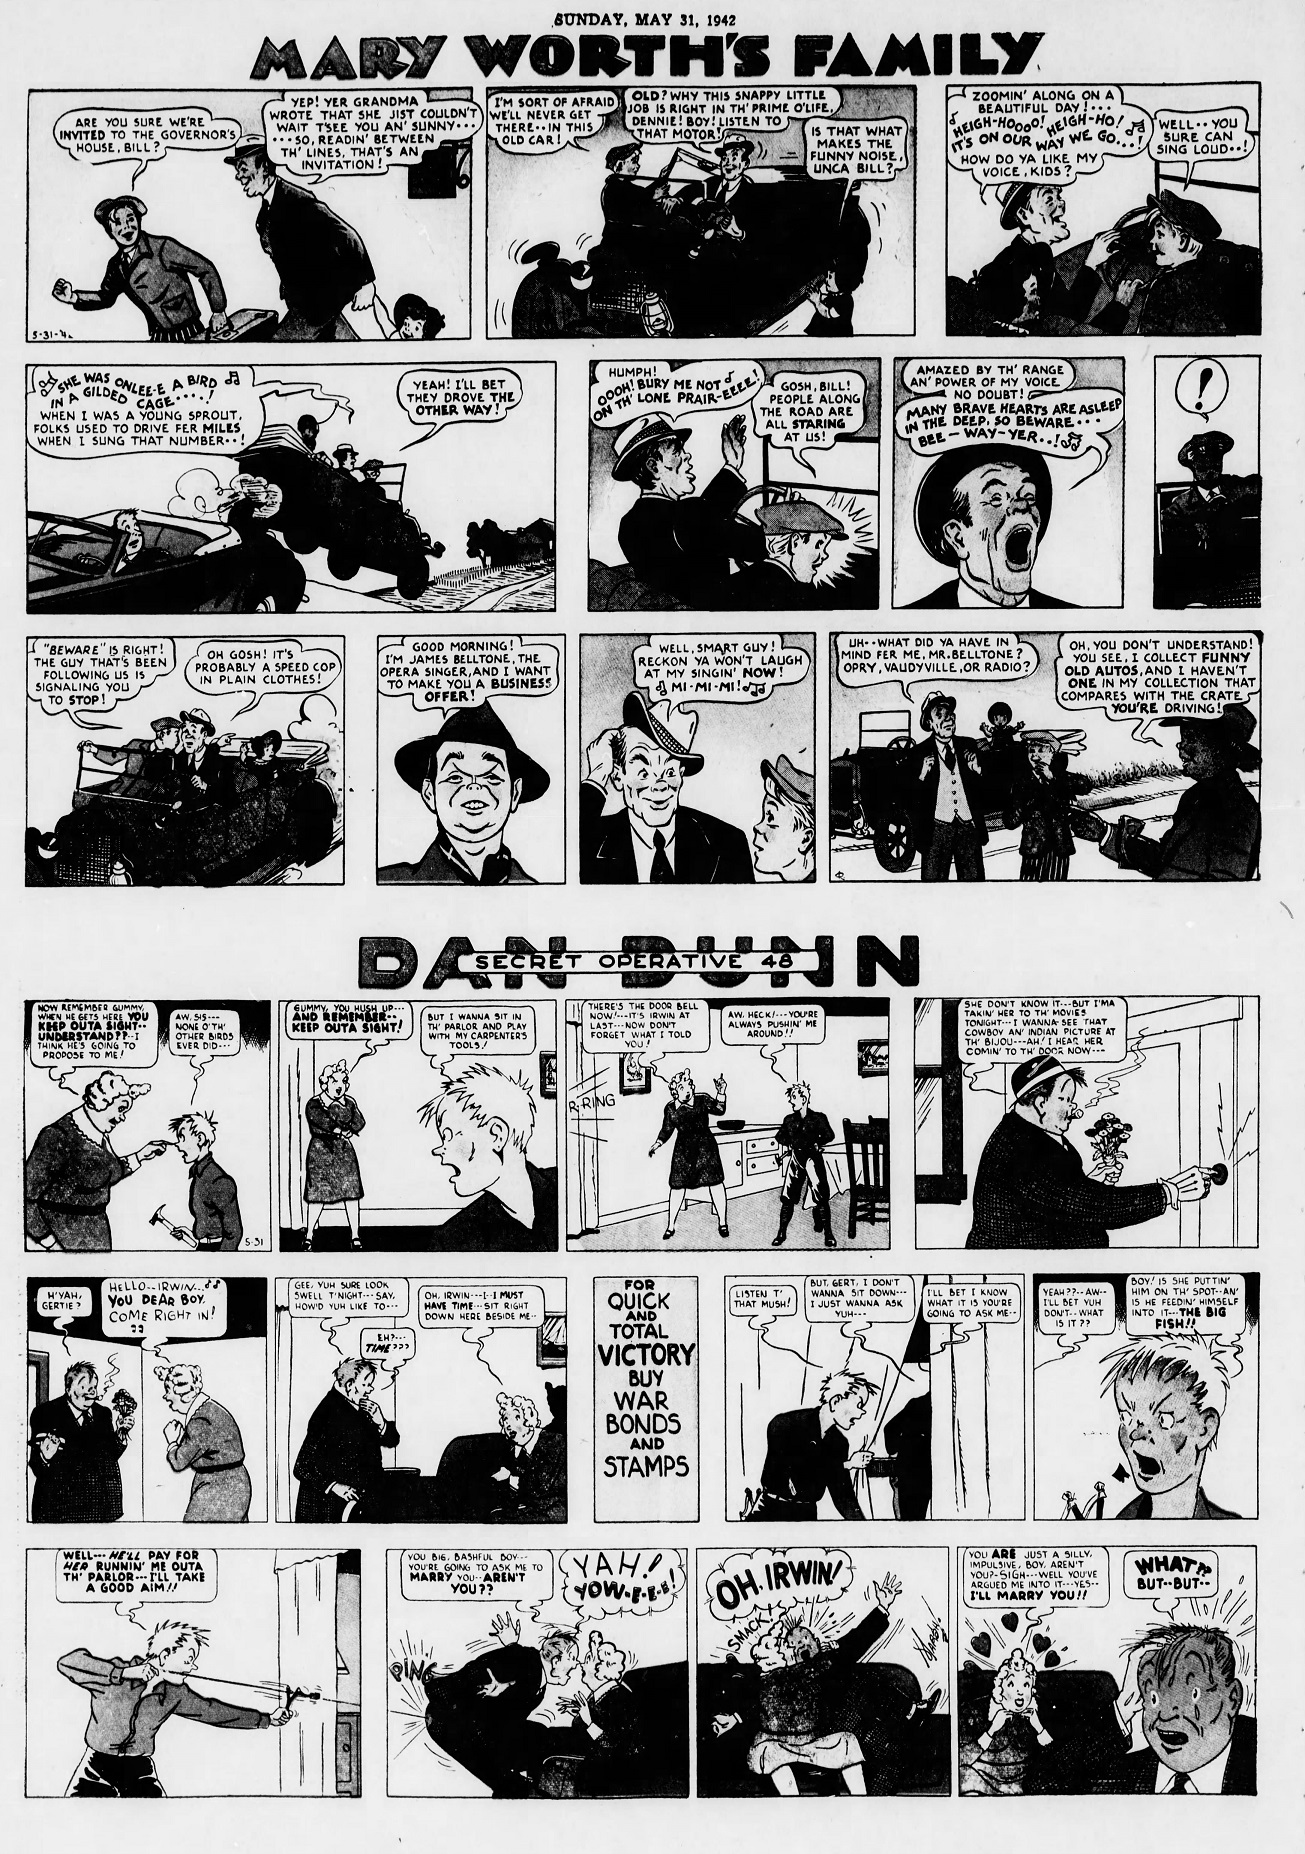 The_Brooklyn_Daily_Eagle_Sun__May_31__1942_(7).jpg